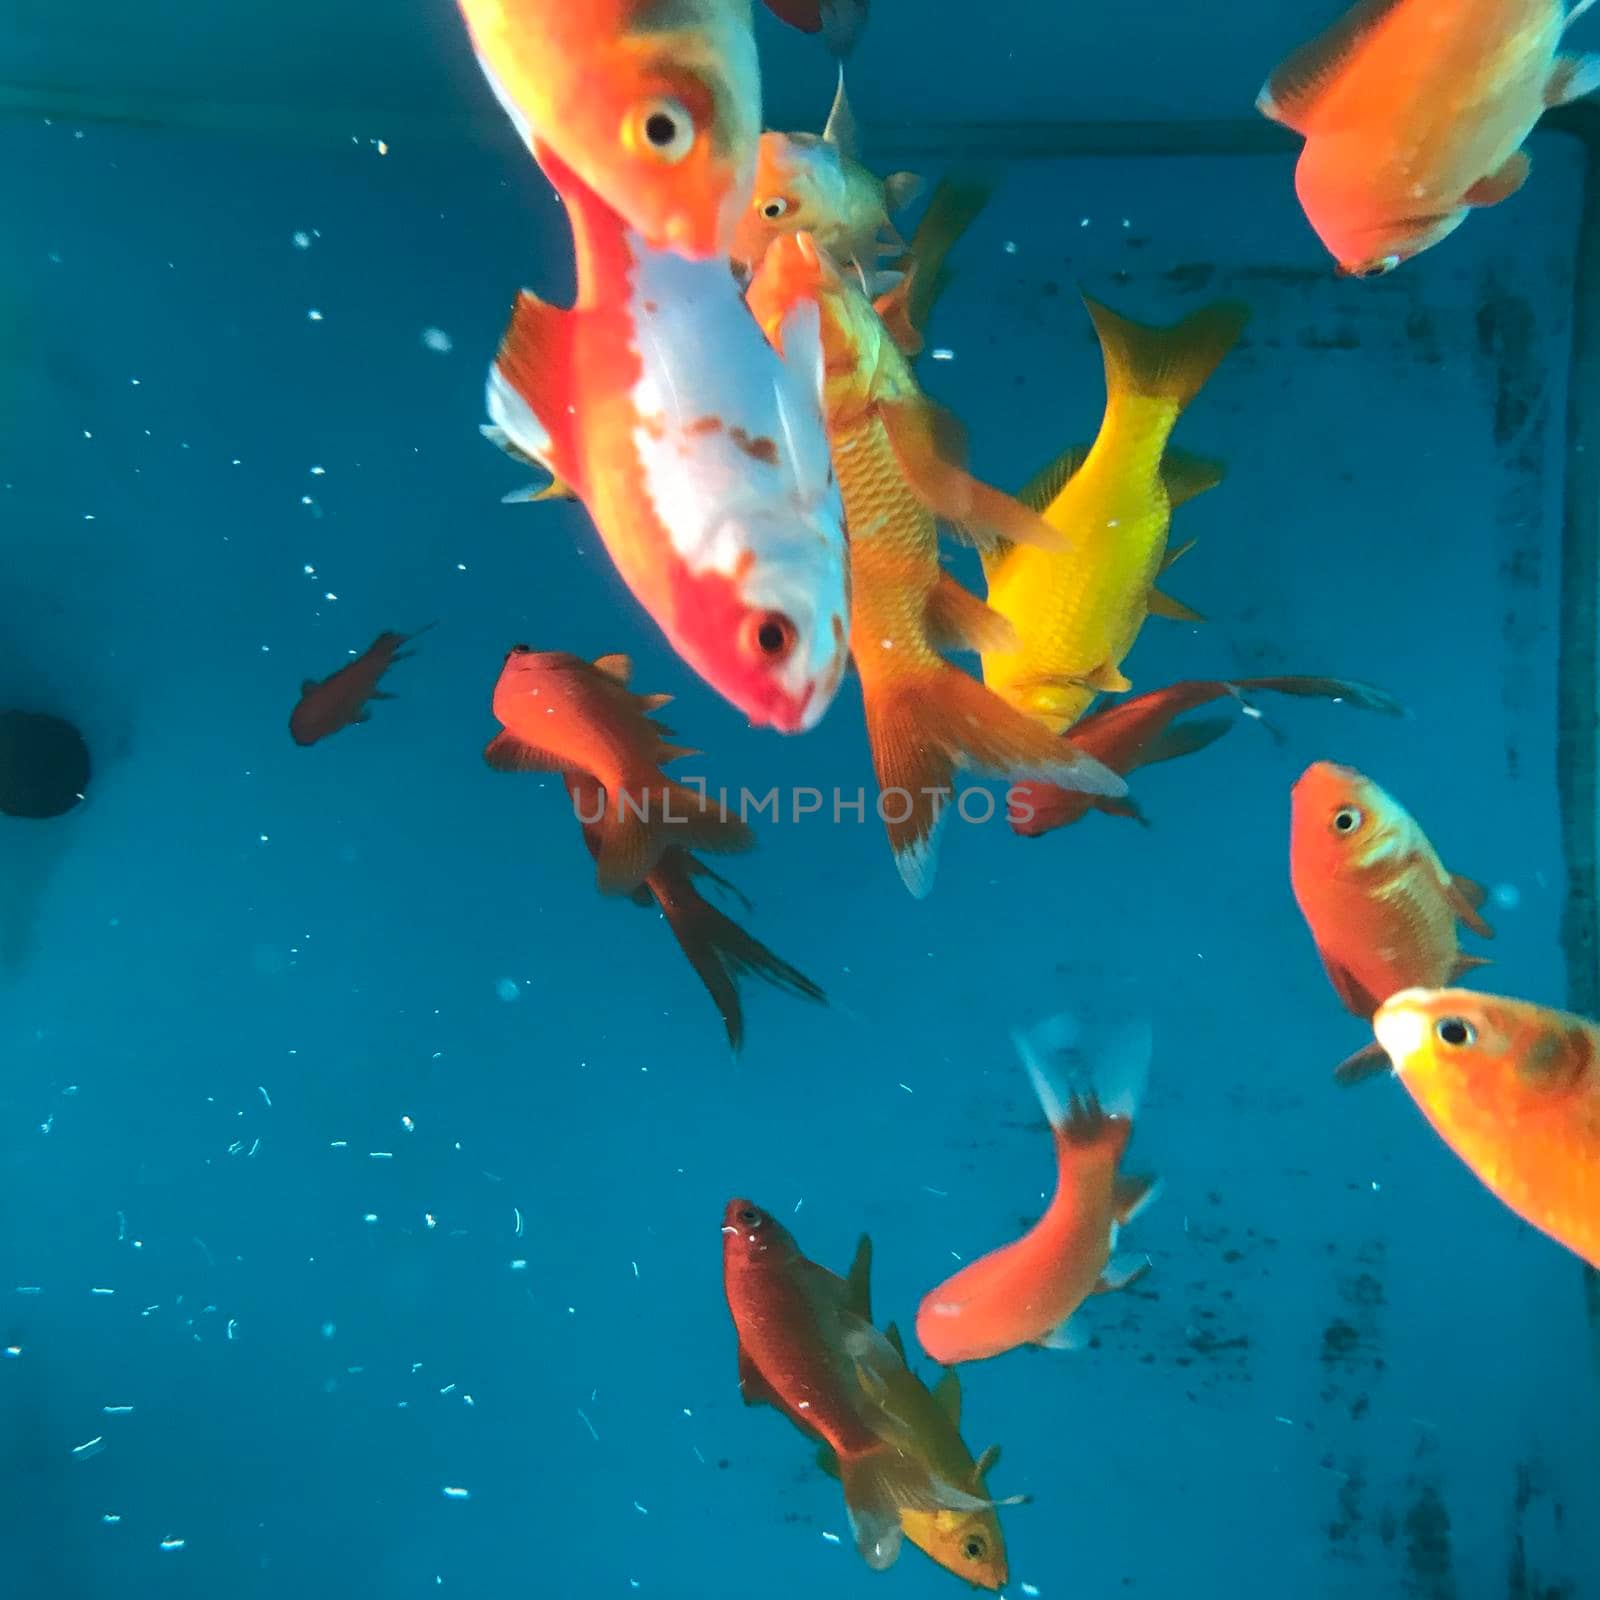 Orange Goldfish in a blue fishtank in a petshop by LeoniekvanderVliet